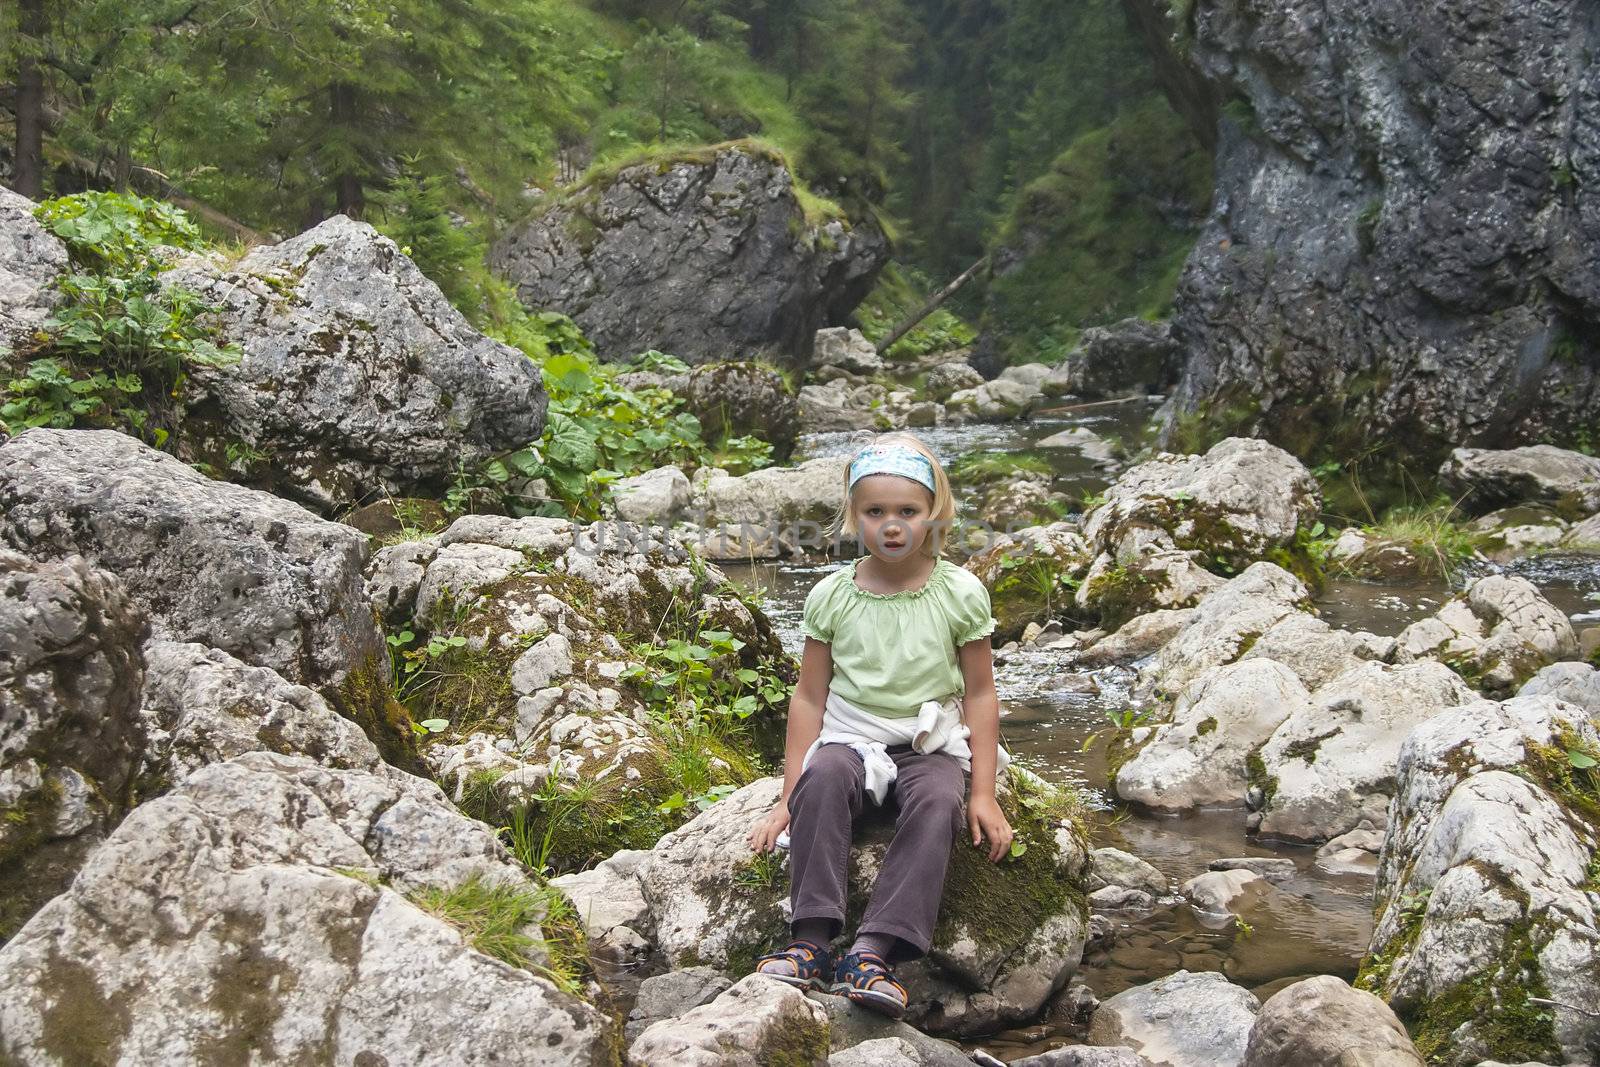 small tourist sitting by a mountain river by miradrozdowski